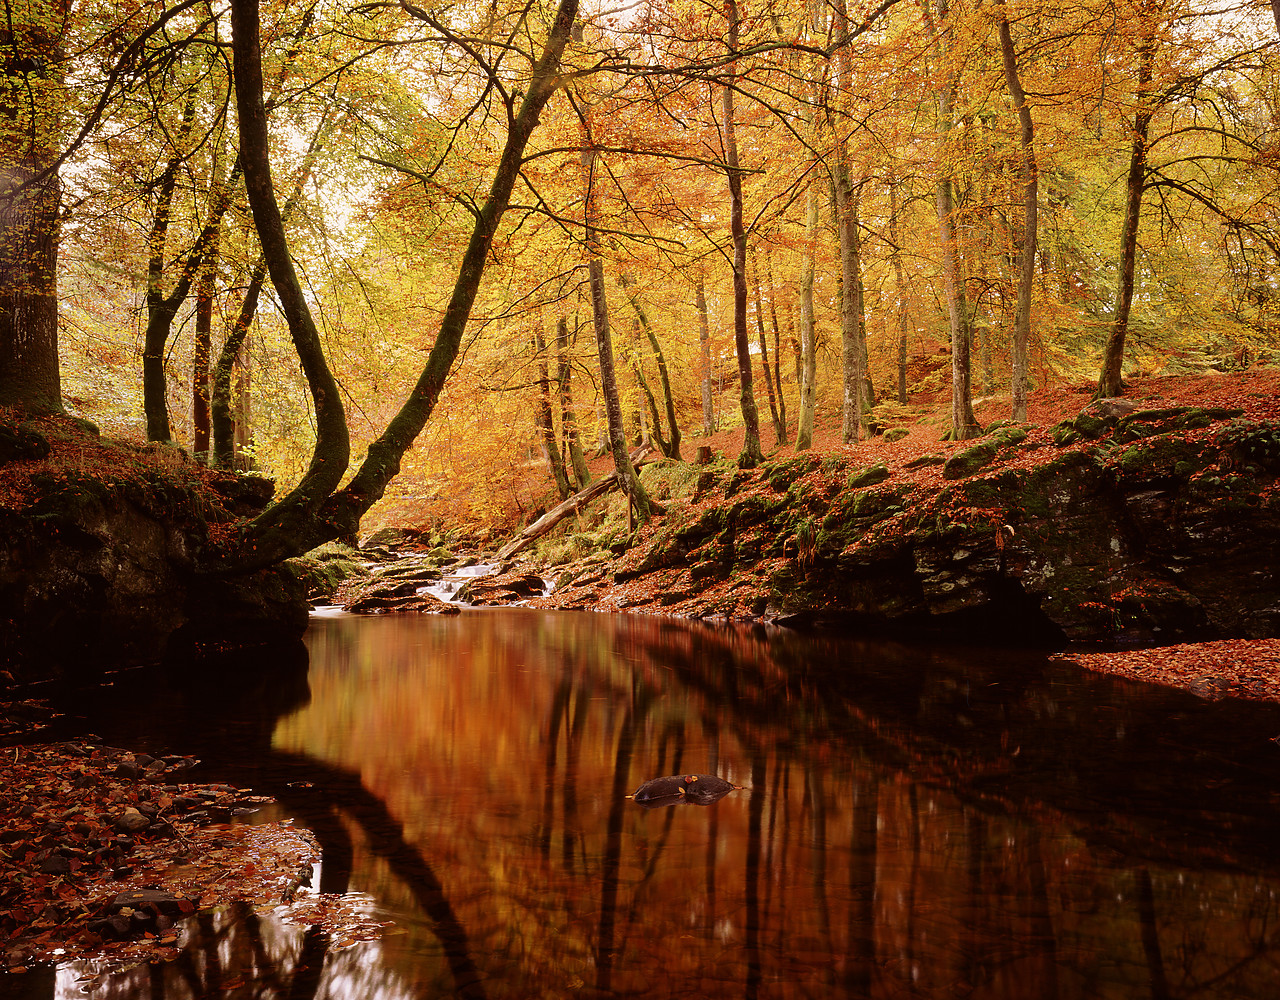 #970486-1 - The Birks of Aberfeldy in Autumn, Aberfeldy, Tayside Region, Scotland